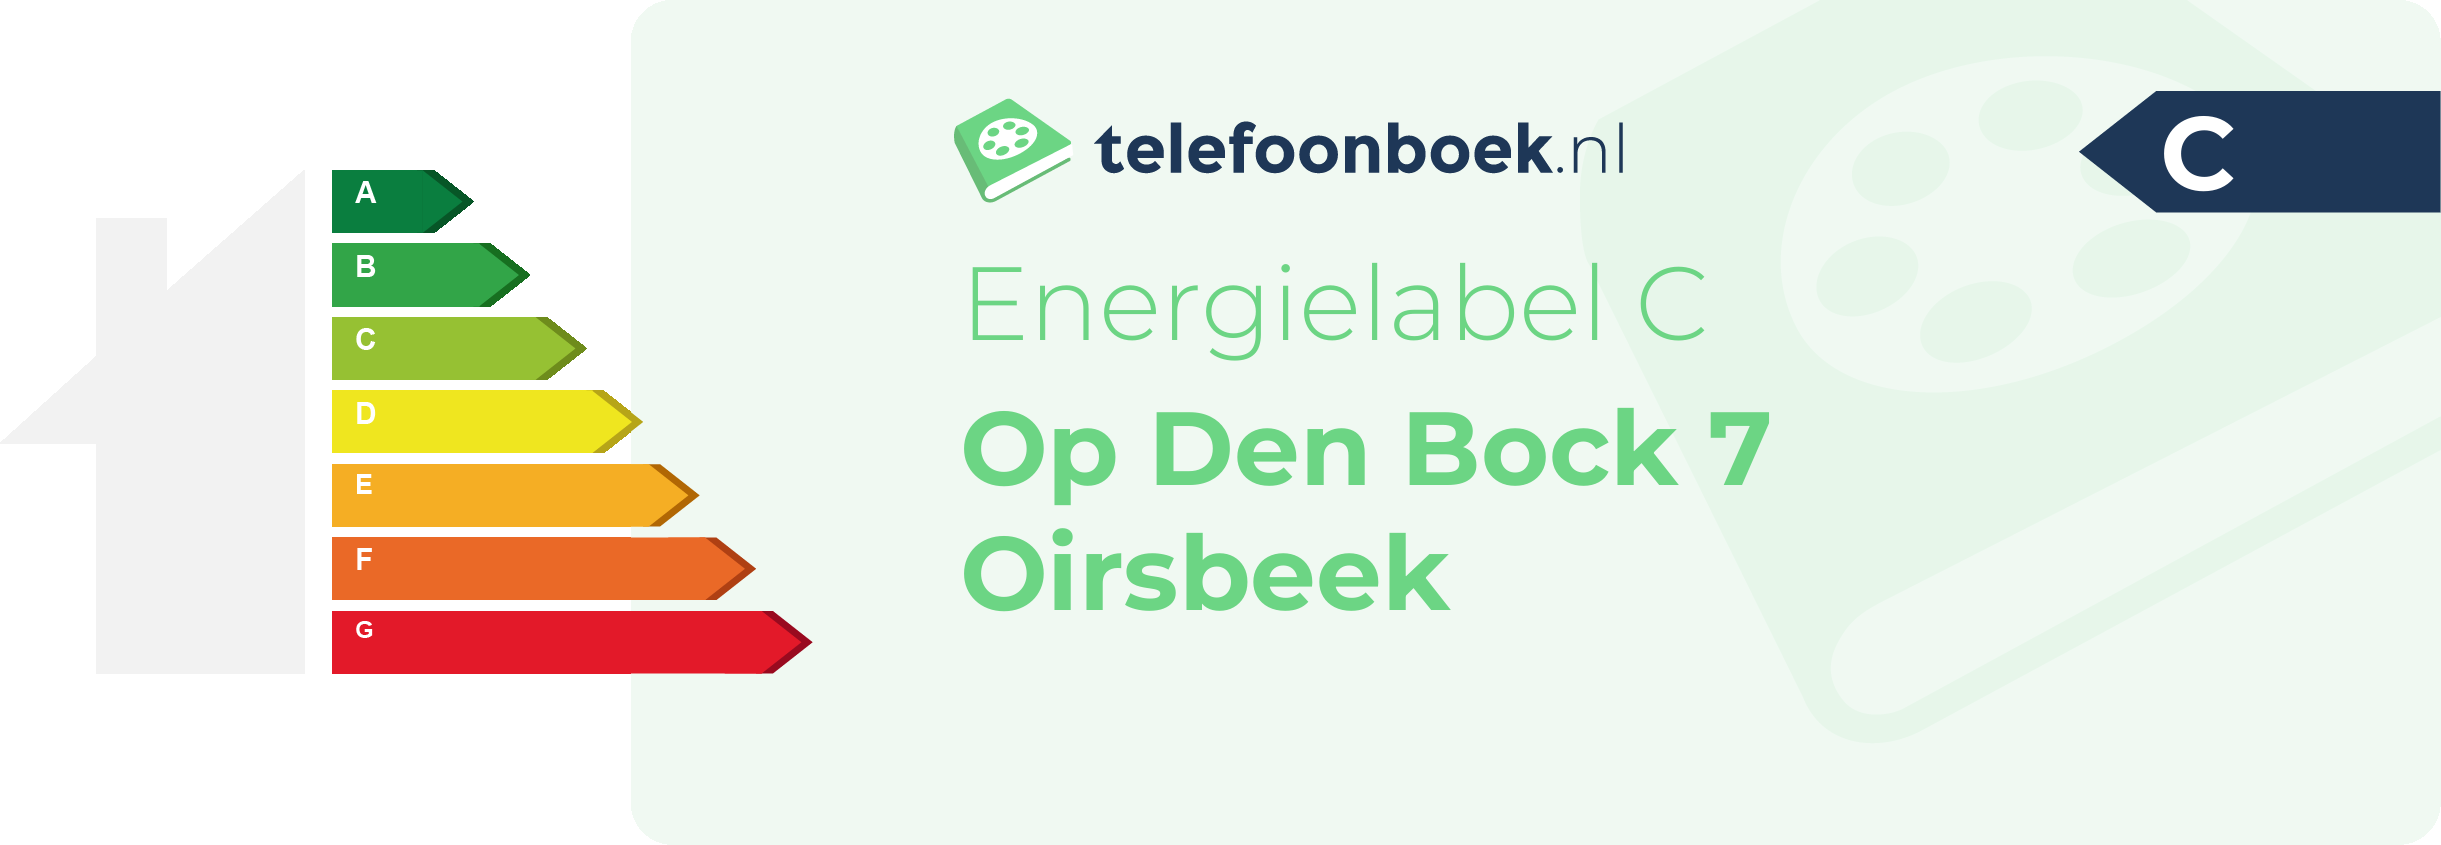 Energielabel Op Den Bock 7 Oirsbeek